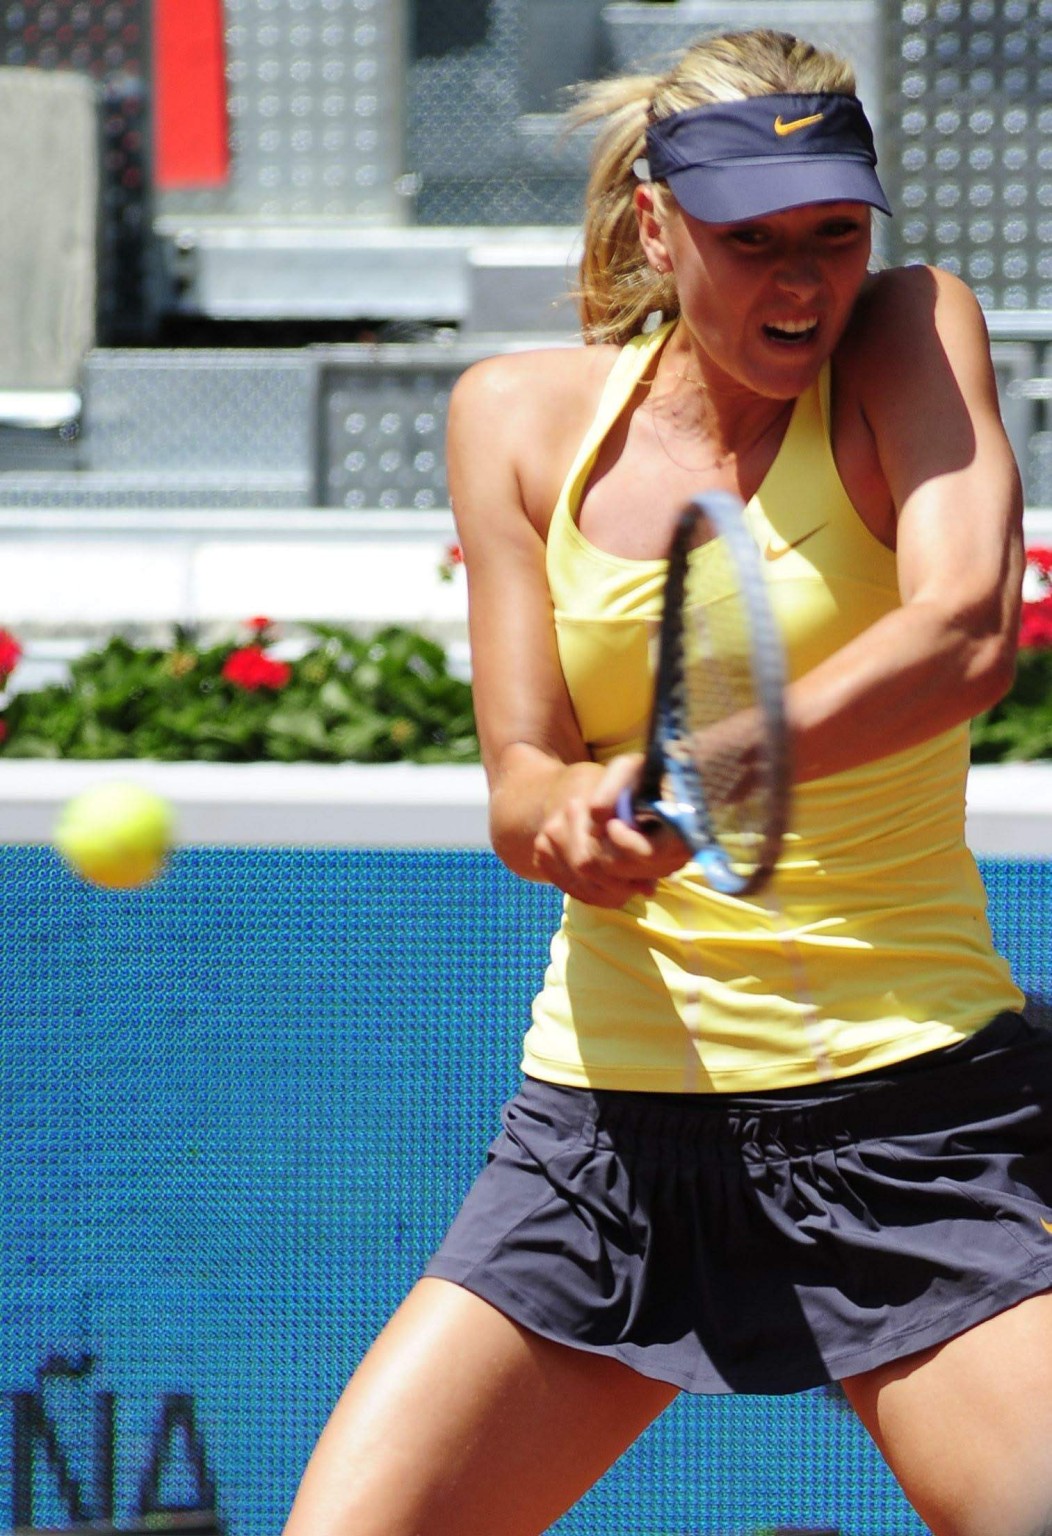 Maria Sharapova en jupe haute au tournoi des 'masters' de Madrid
 #75305217